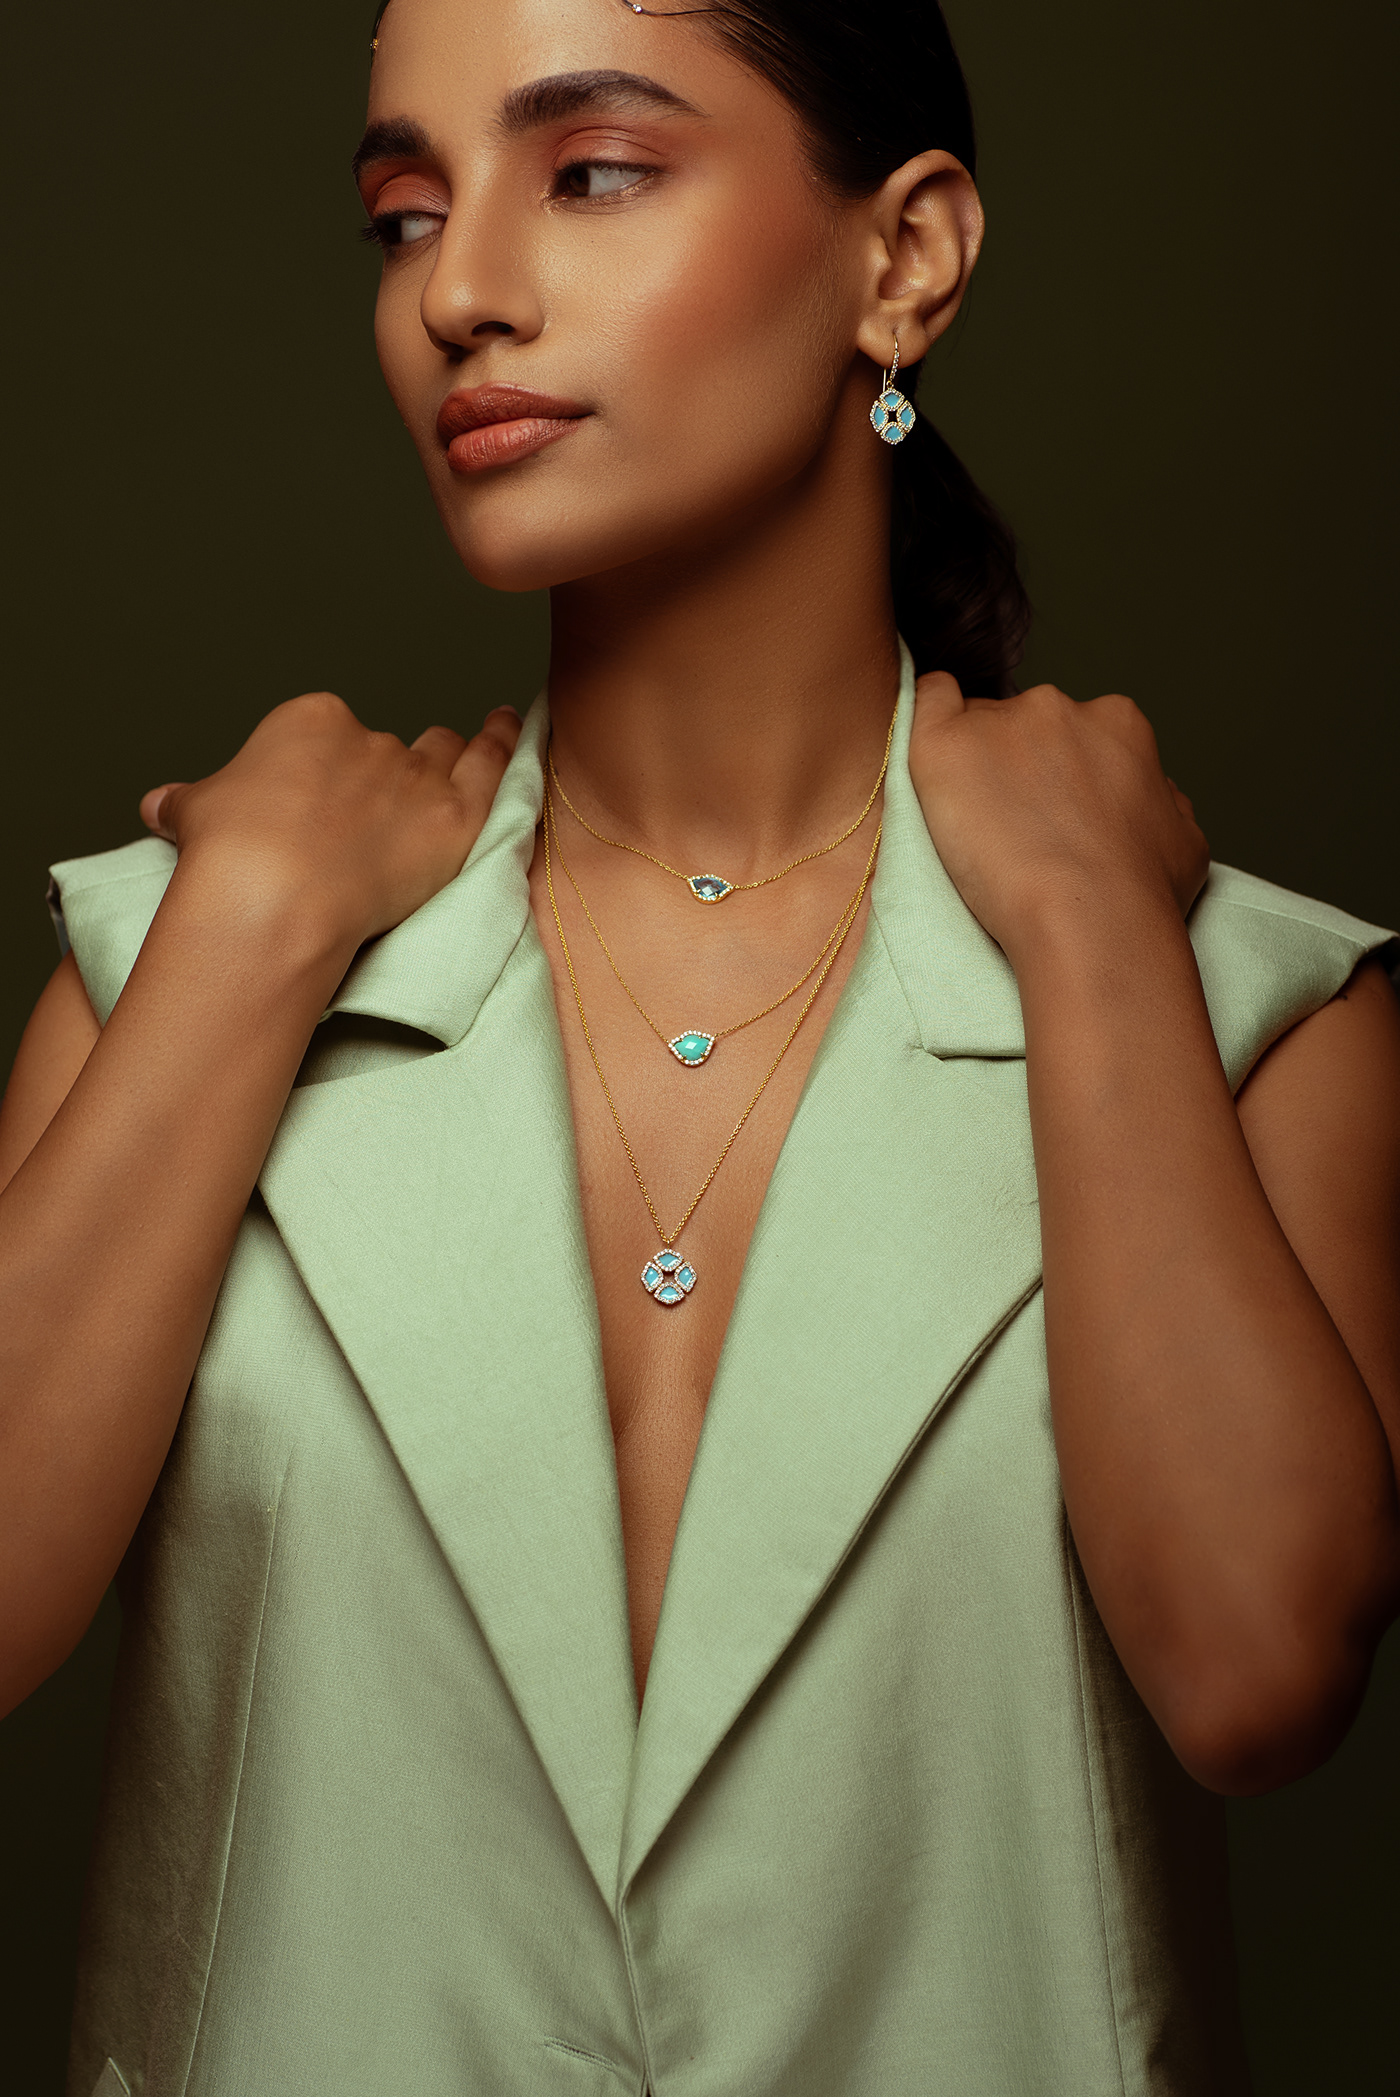 delhi photographer editorial Fashion  Jaipur Jewellery jewellery editorial Luxury jewelry mumbai photographer photographer portrait